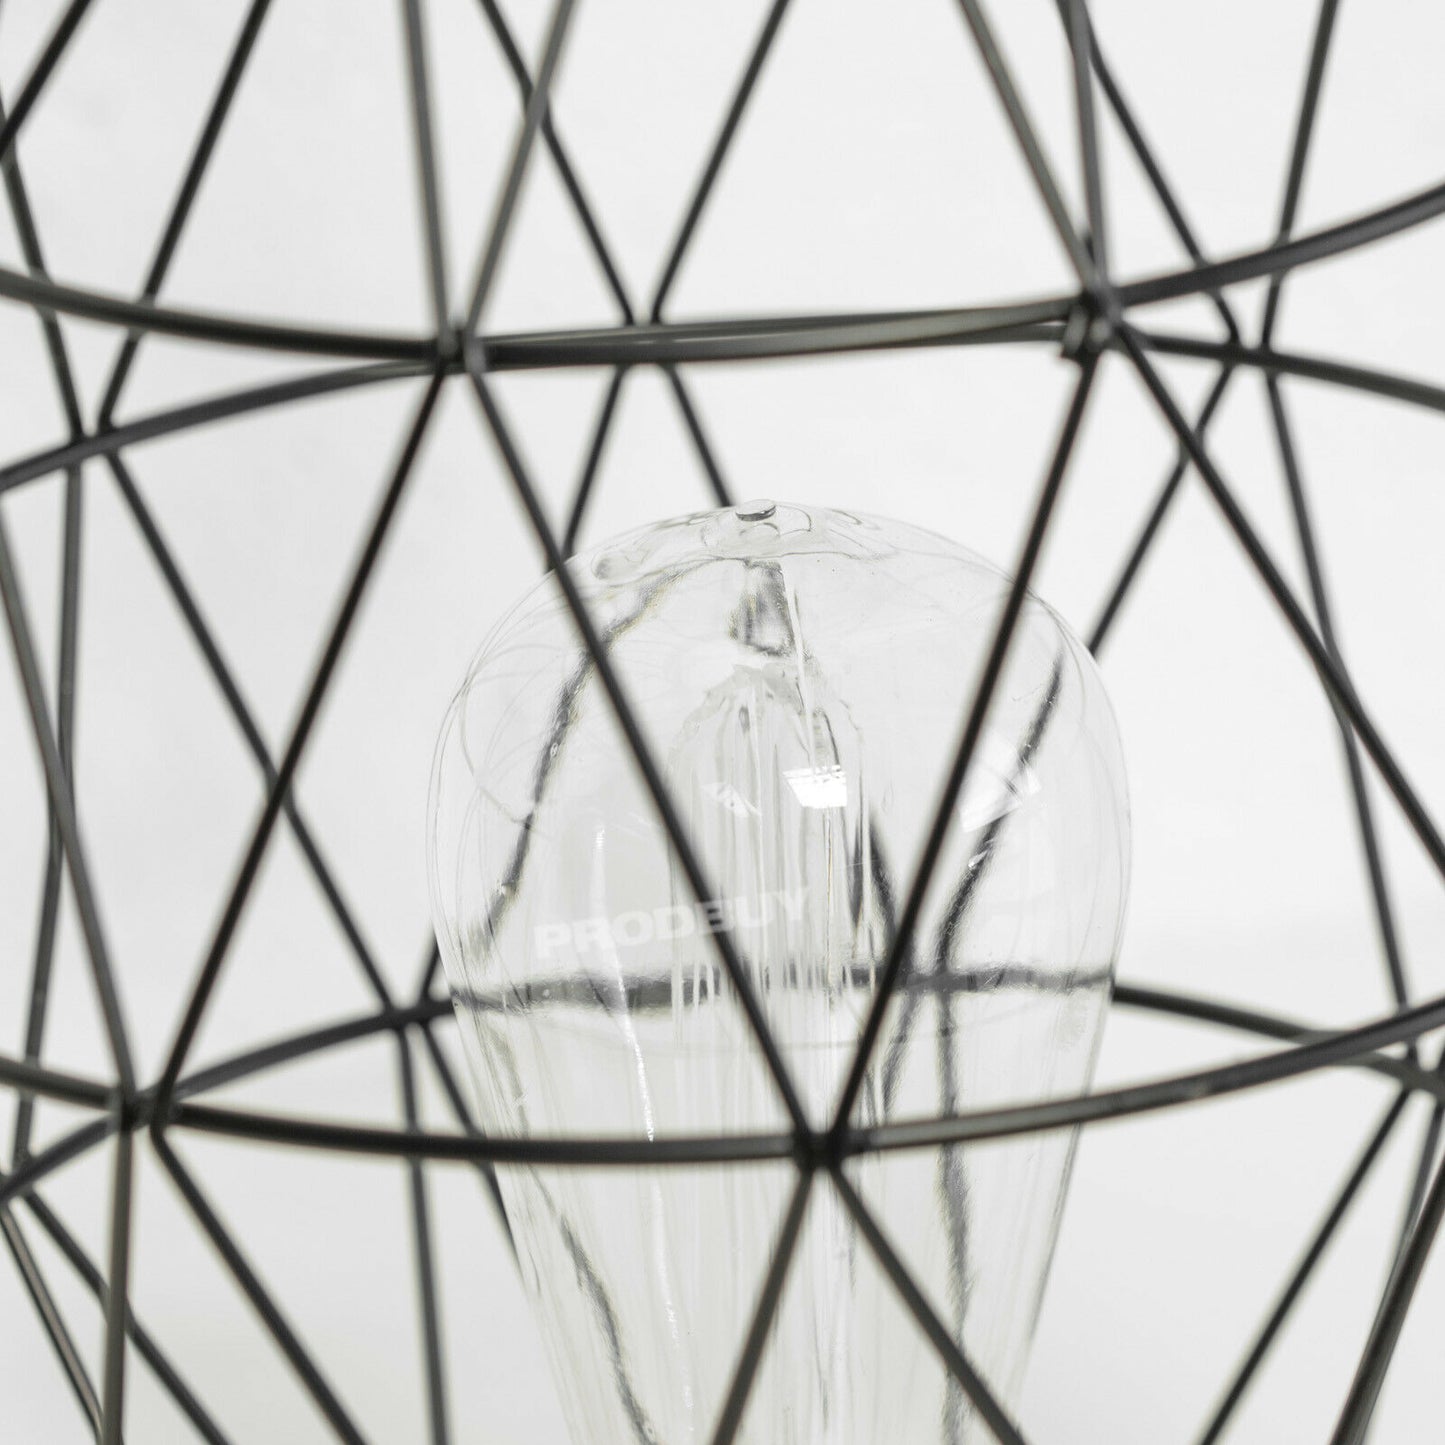 Geometric LED Lantern Cage Design 29cm Mood Lamp